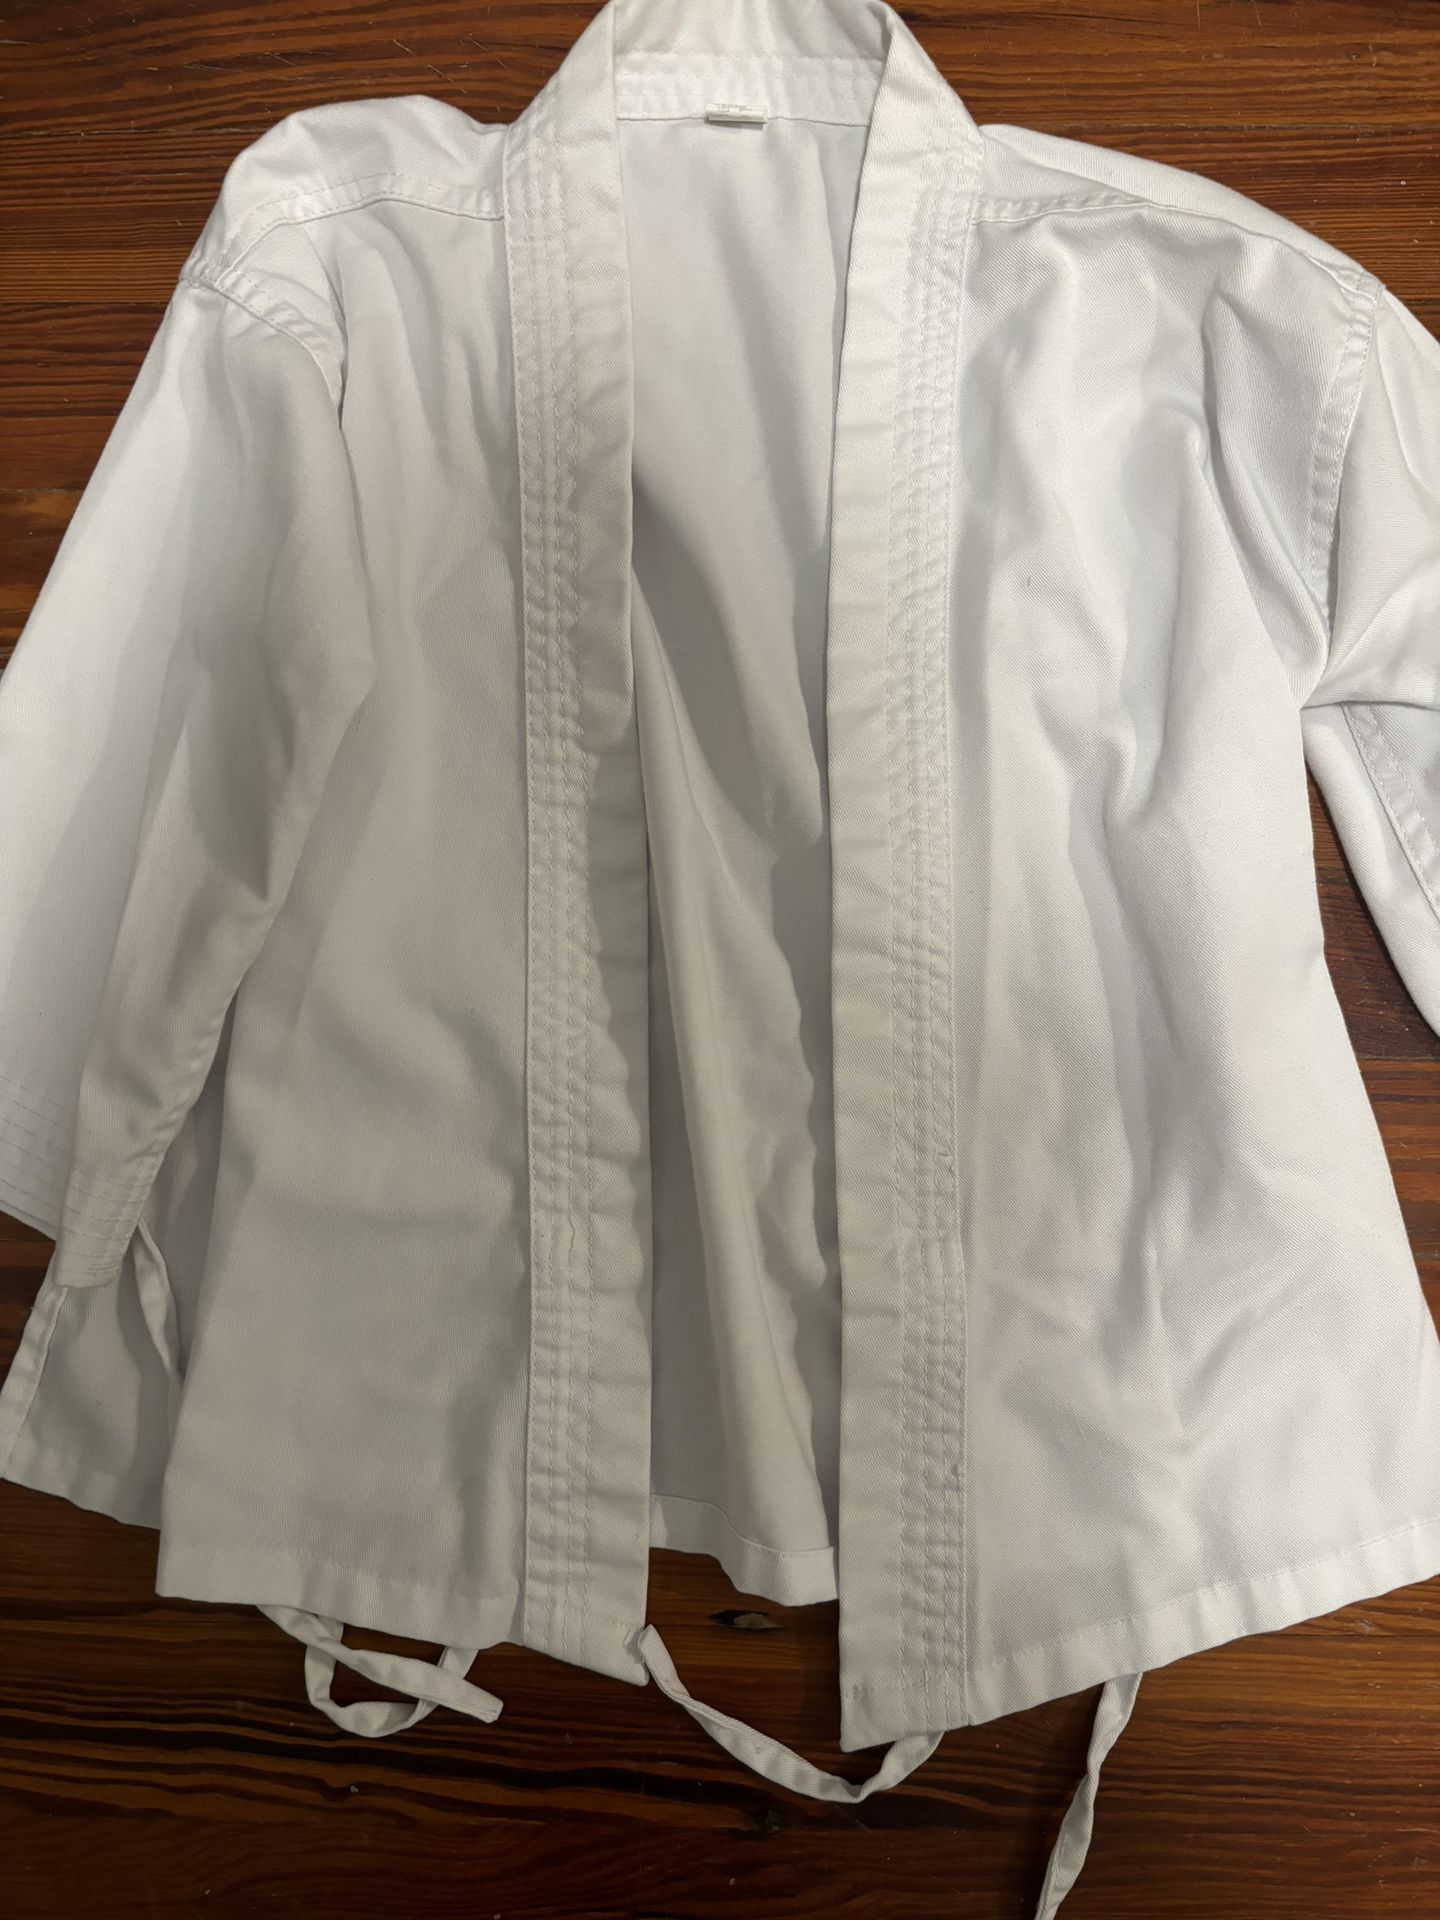 Kids Karate Gi Jacket, Size 000, Used